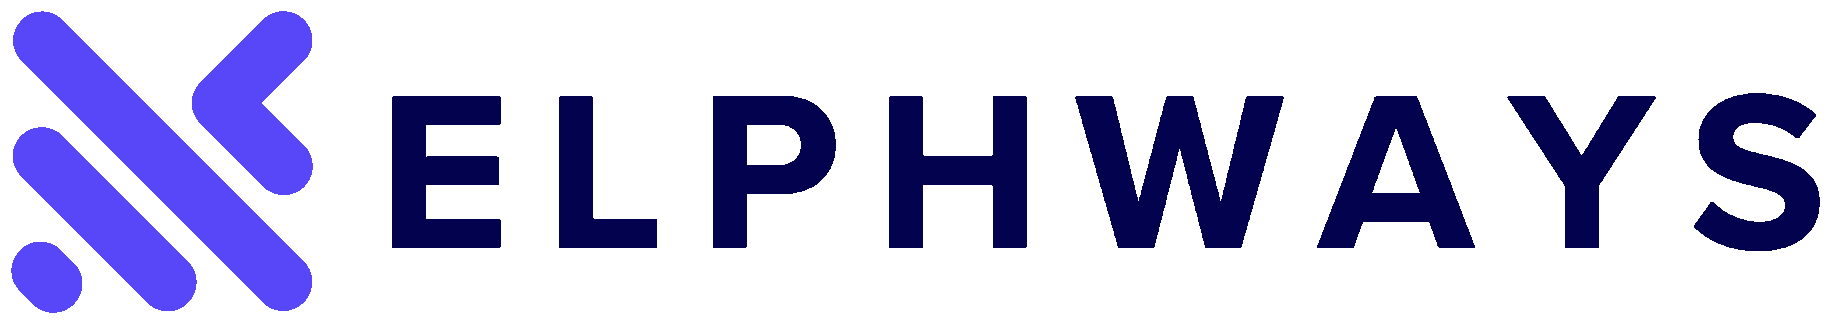 Elphways logo